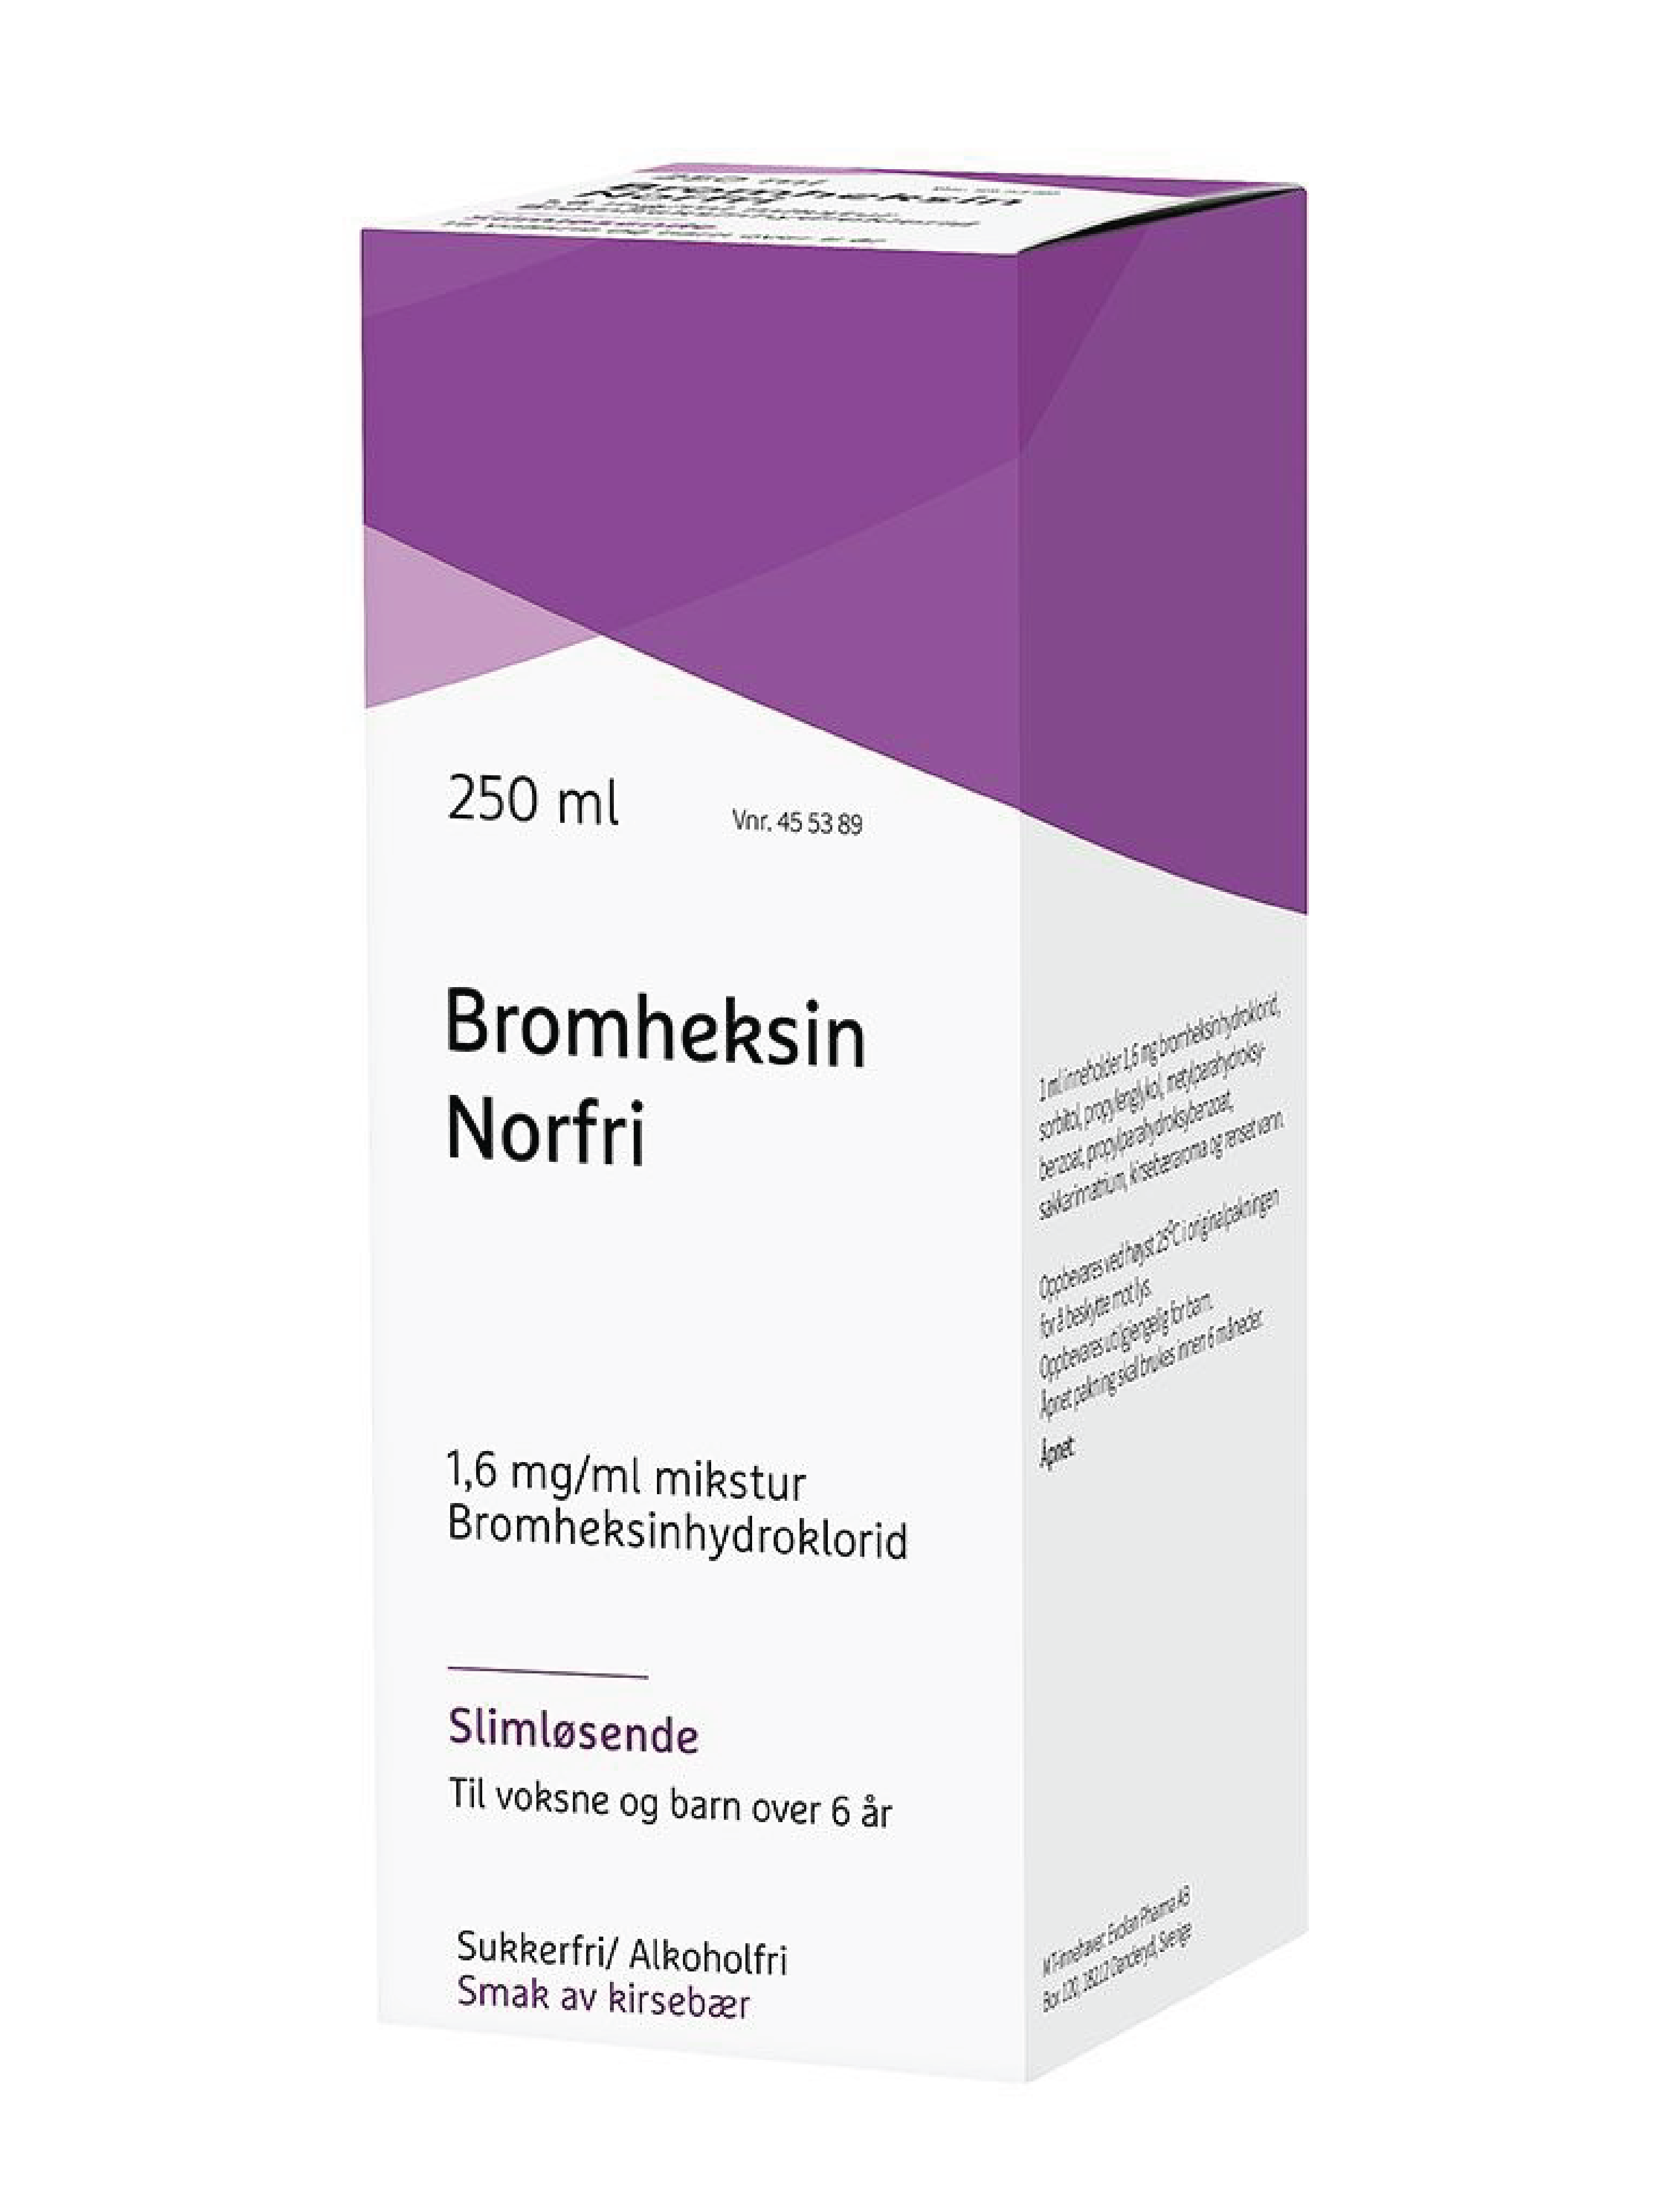 Bromheksin Norfri 1,6 mg/ml mikstur, Kirsebær, 250 ml